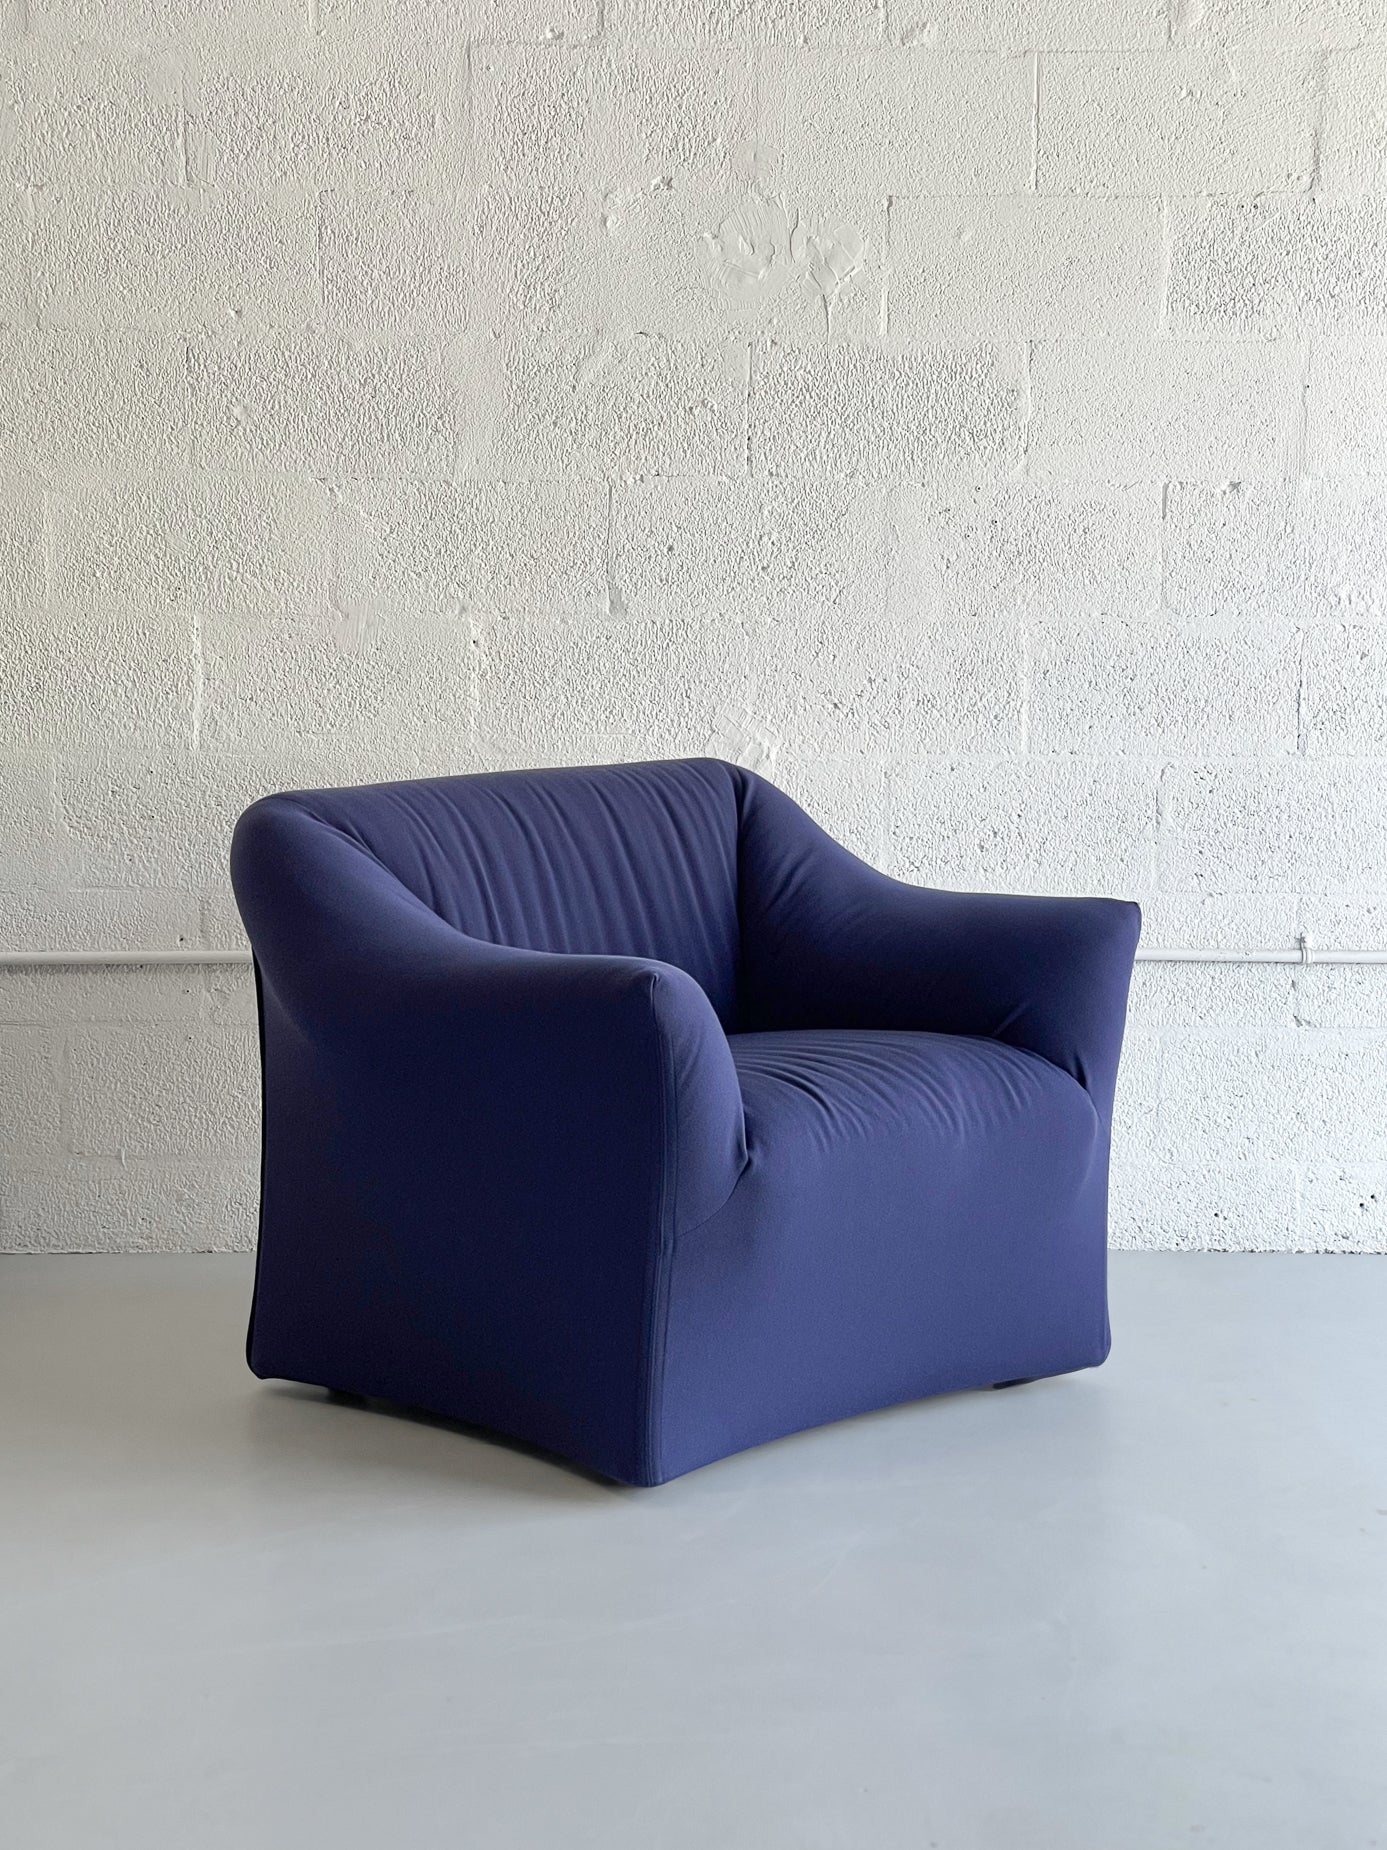 1970s Tentazione Lounge Chair by Mario Bellini for Cassina